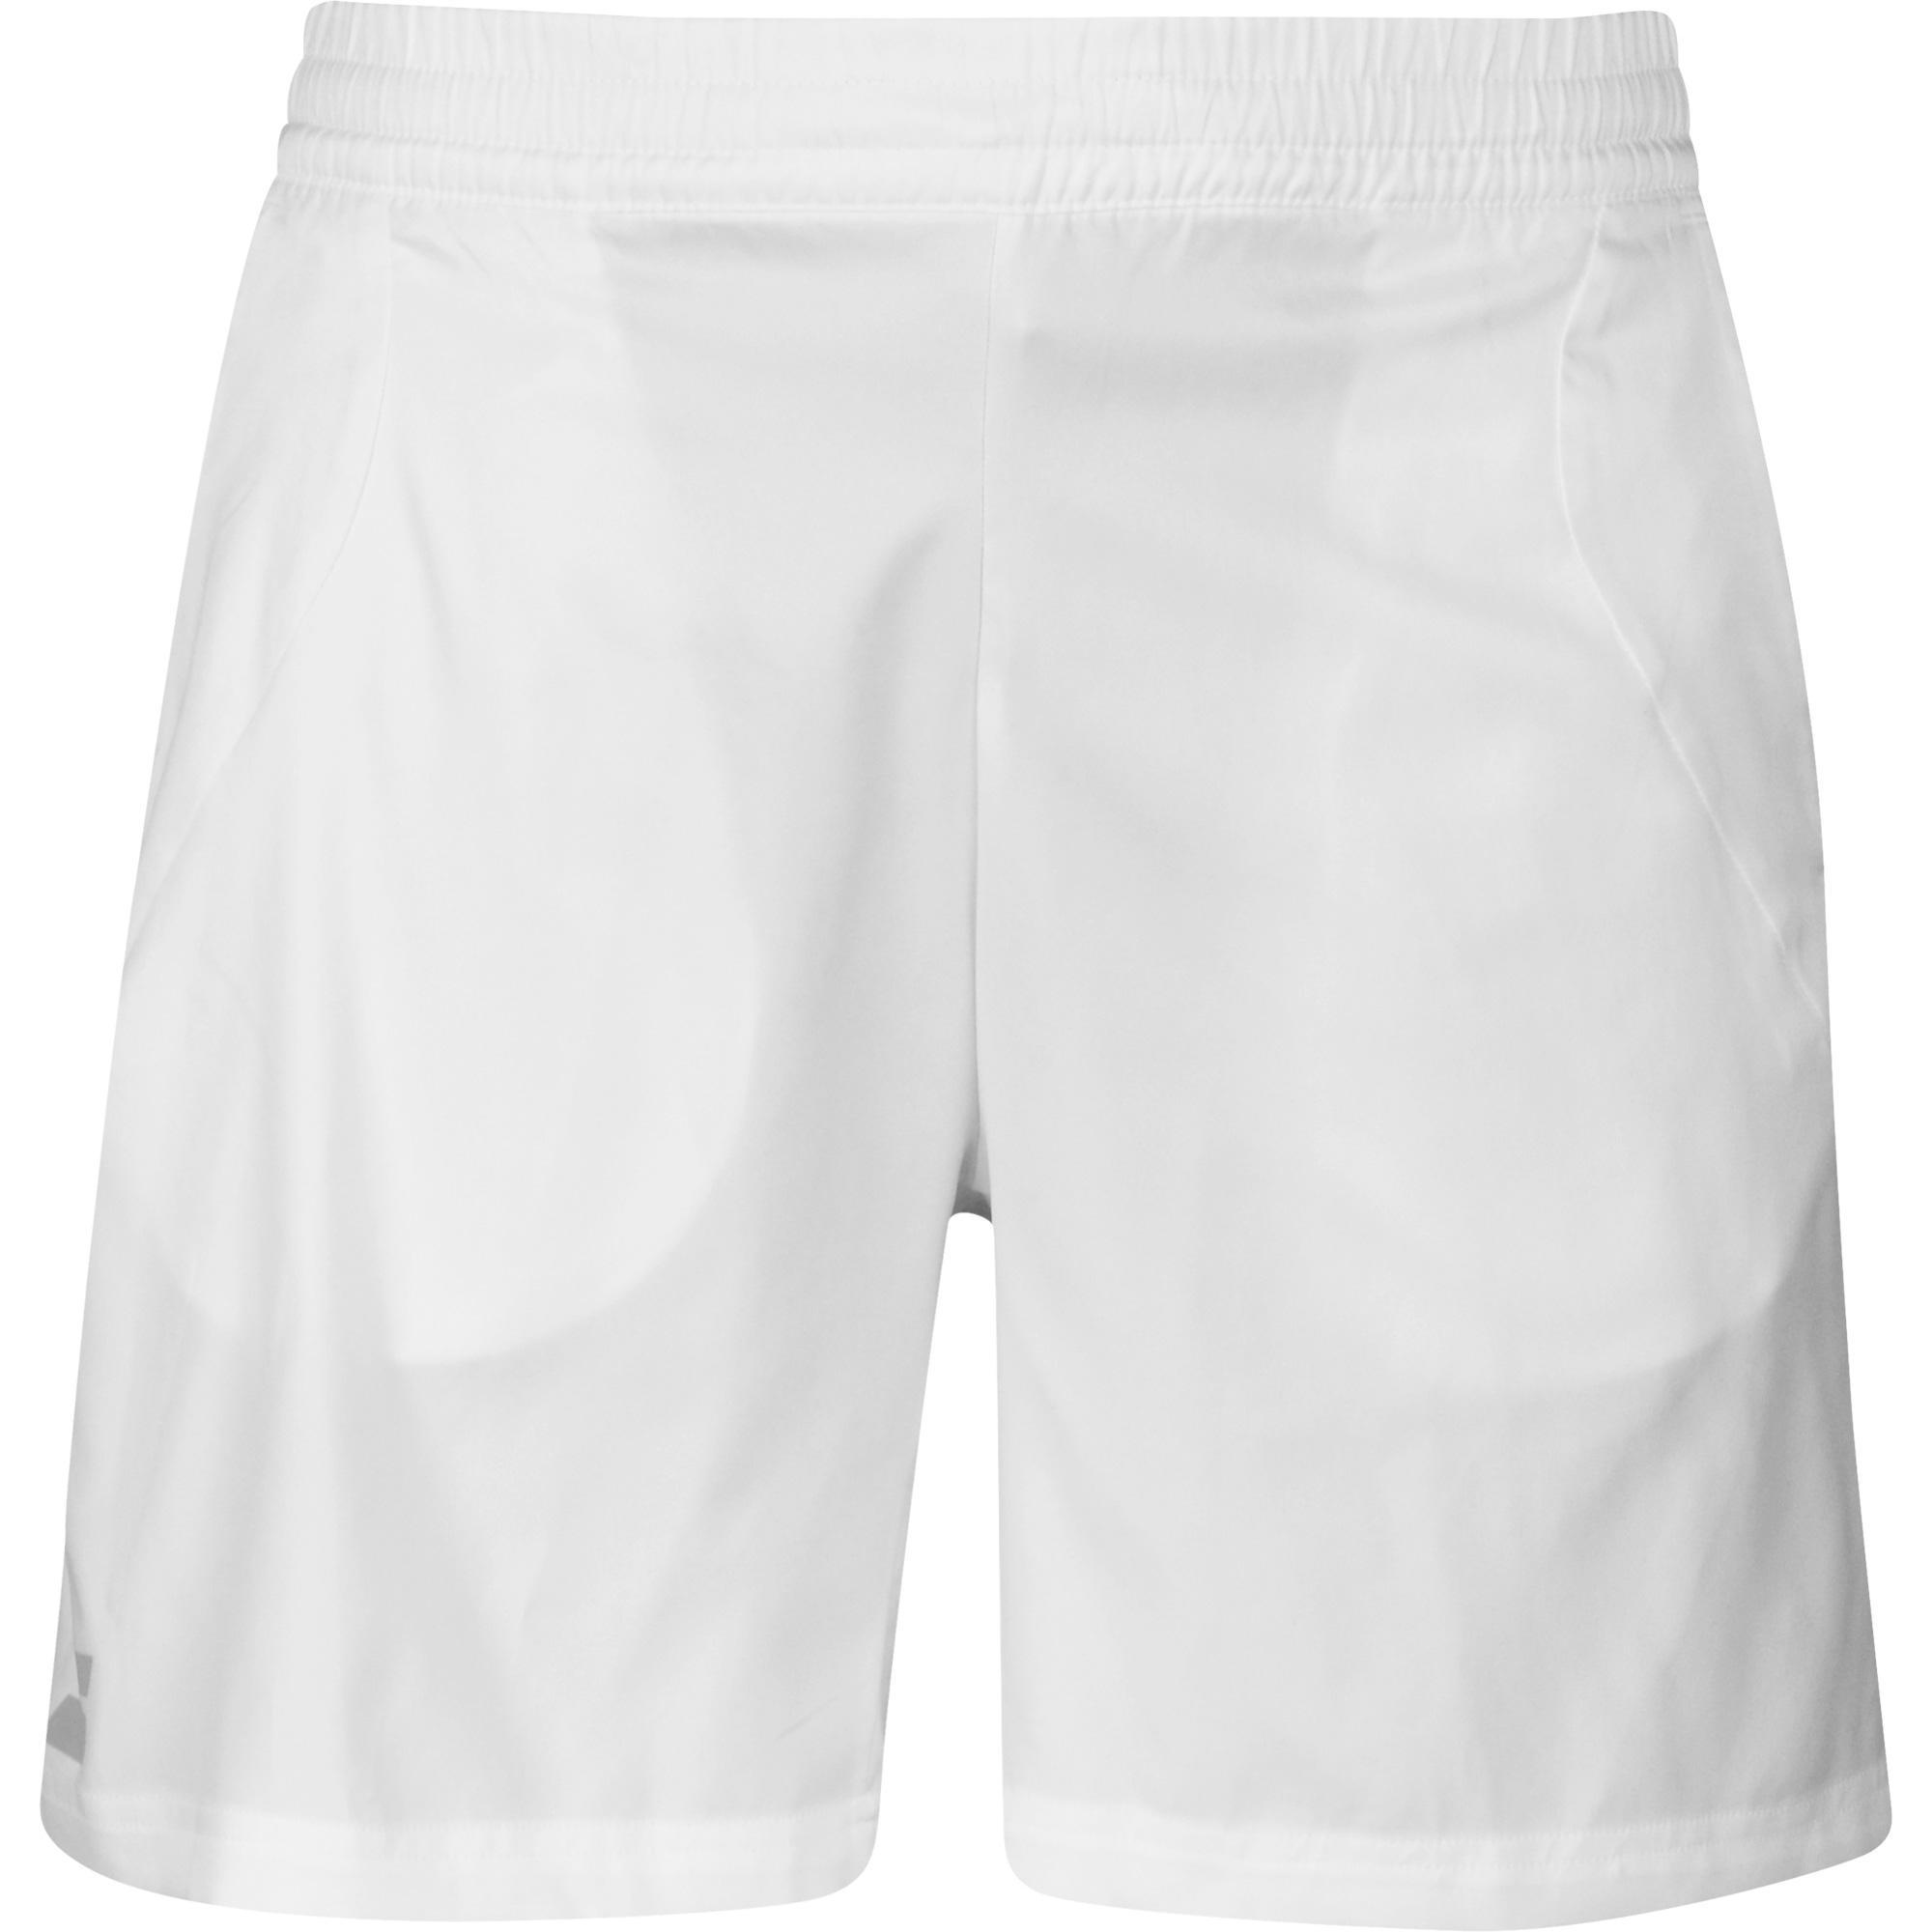 Babolat Boys Core Shorts - White - Tennisnuts.com